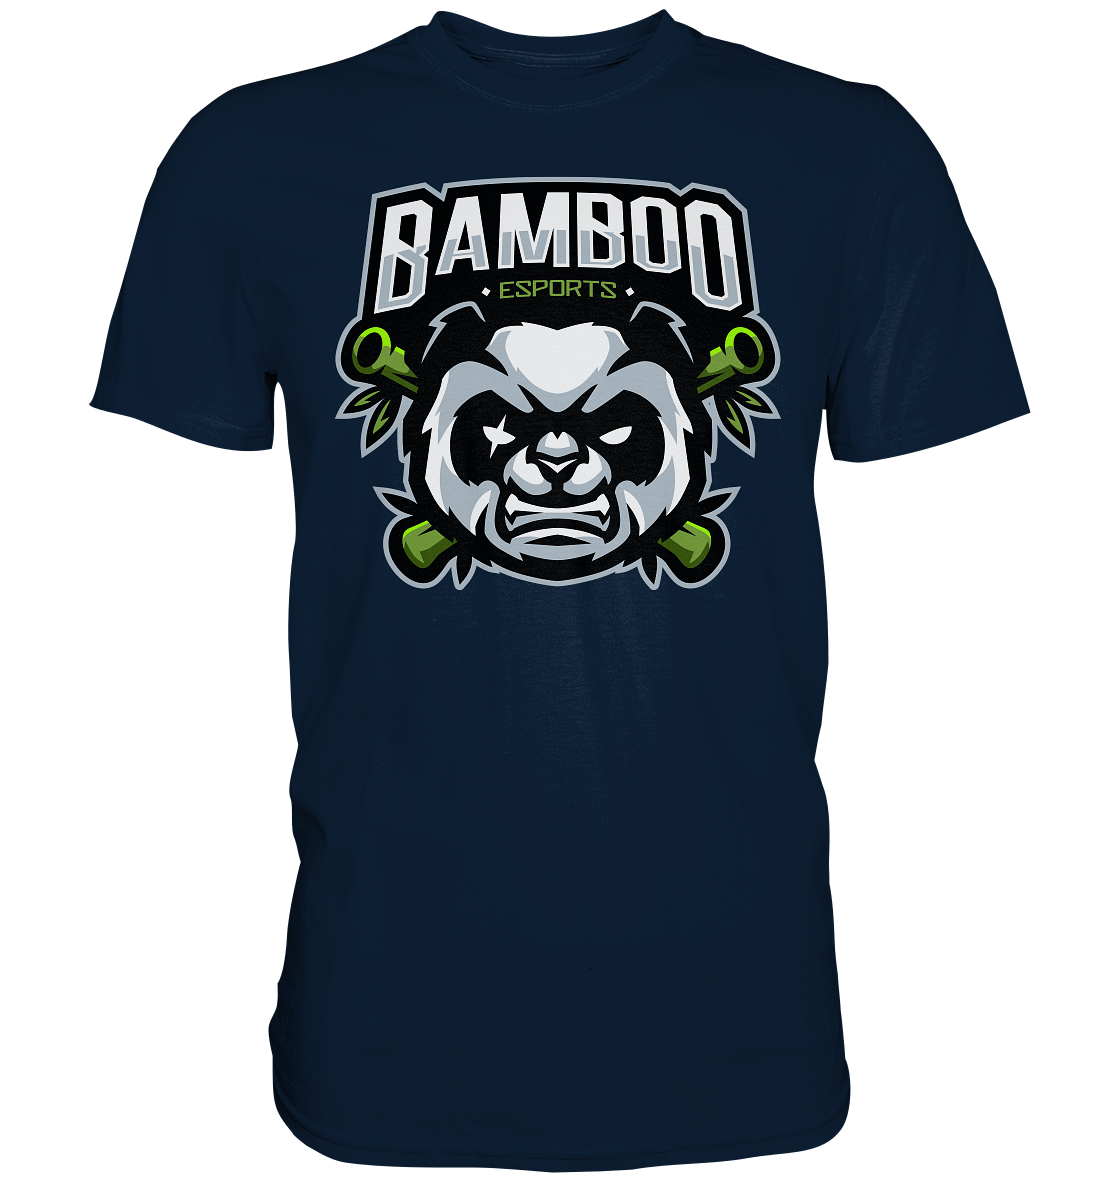 BAMBOO ESPORTS - Basic Shirt